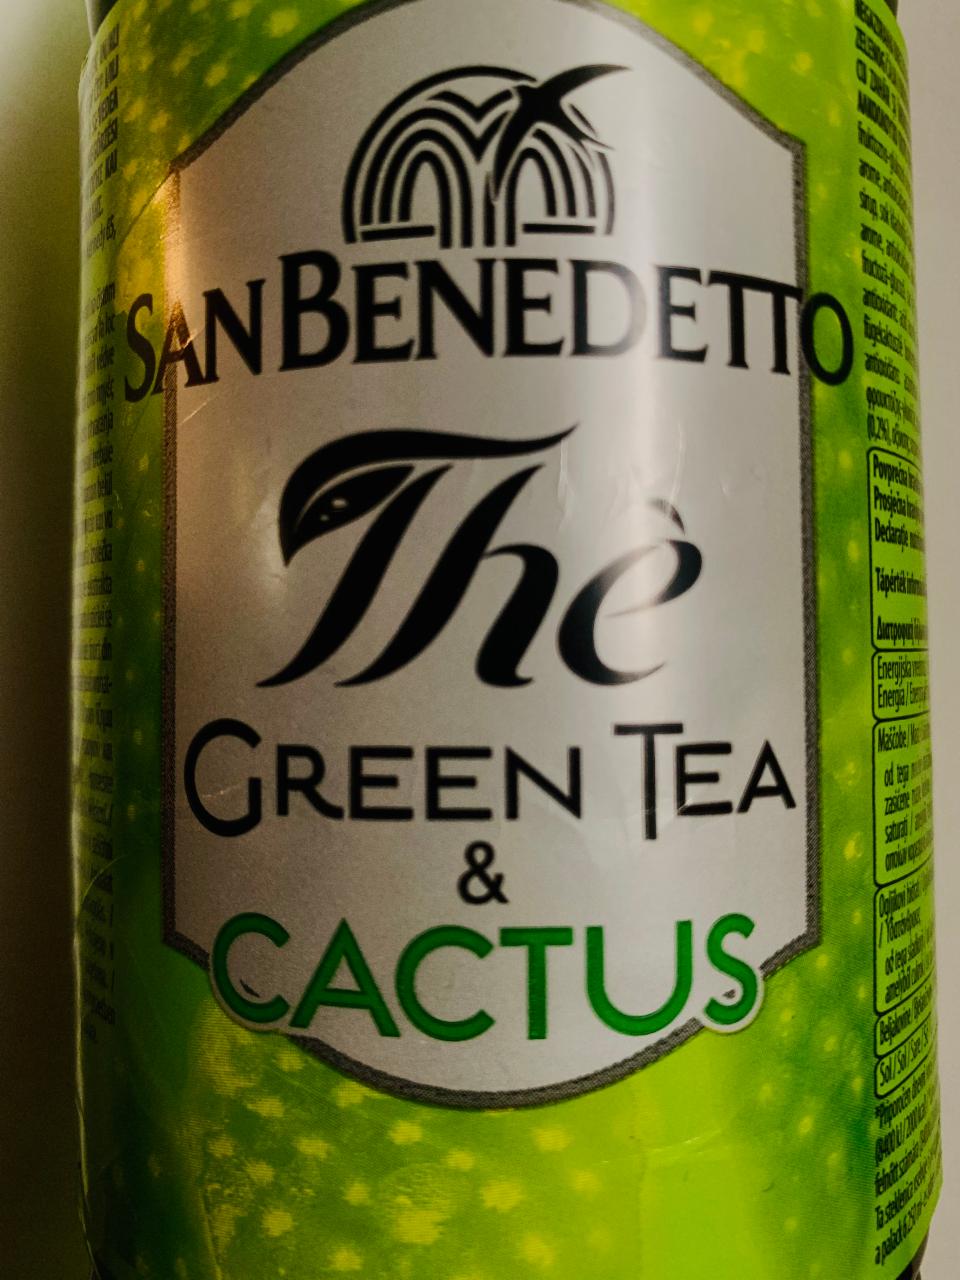 Képek - Green tea & cactus üdítőital San Benedetto